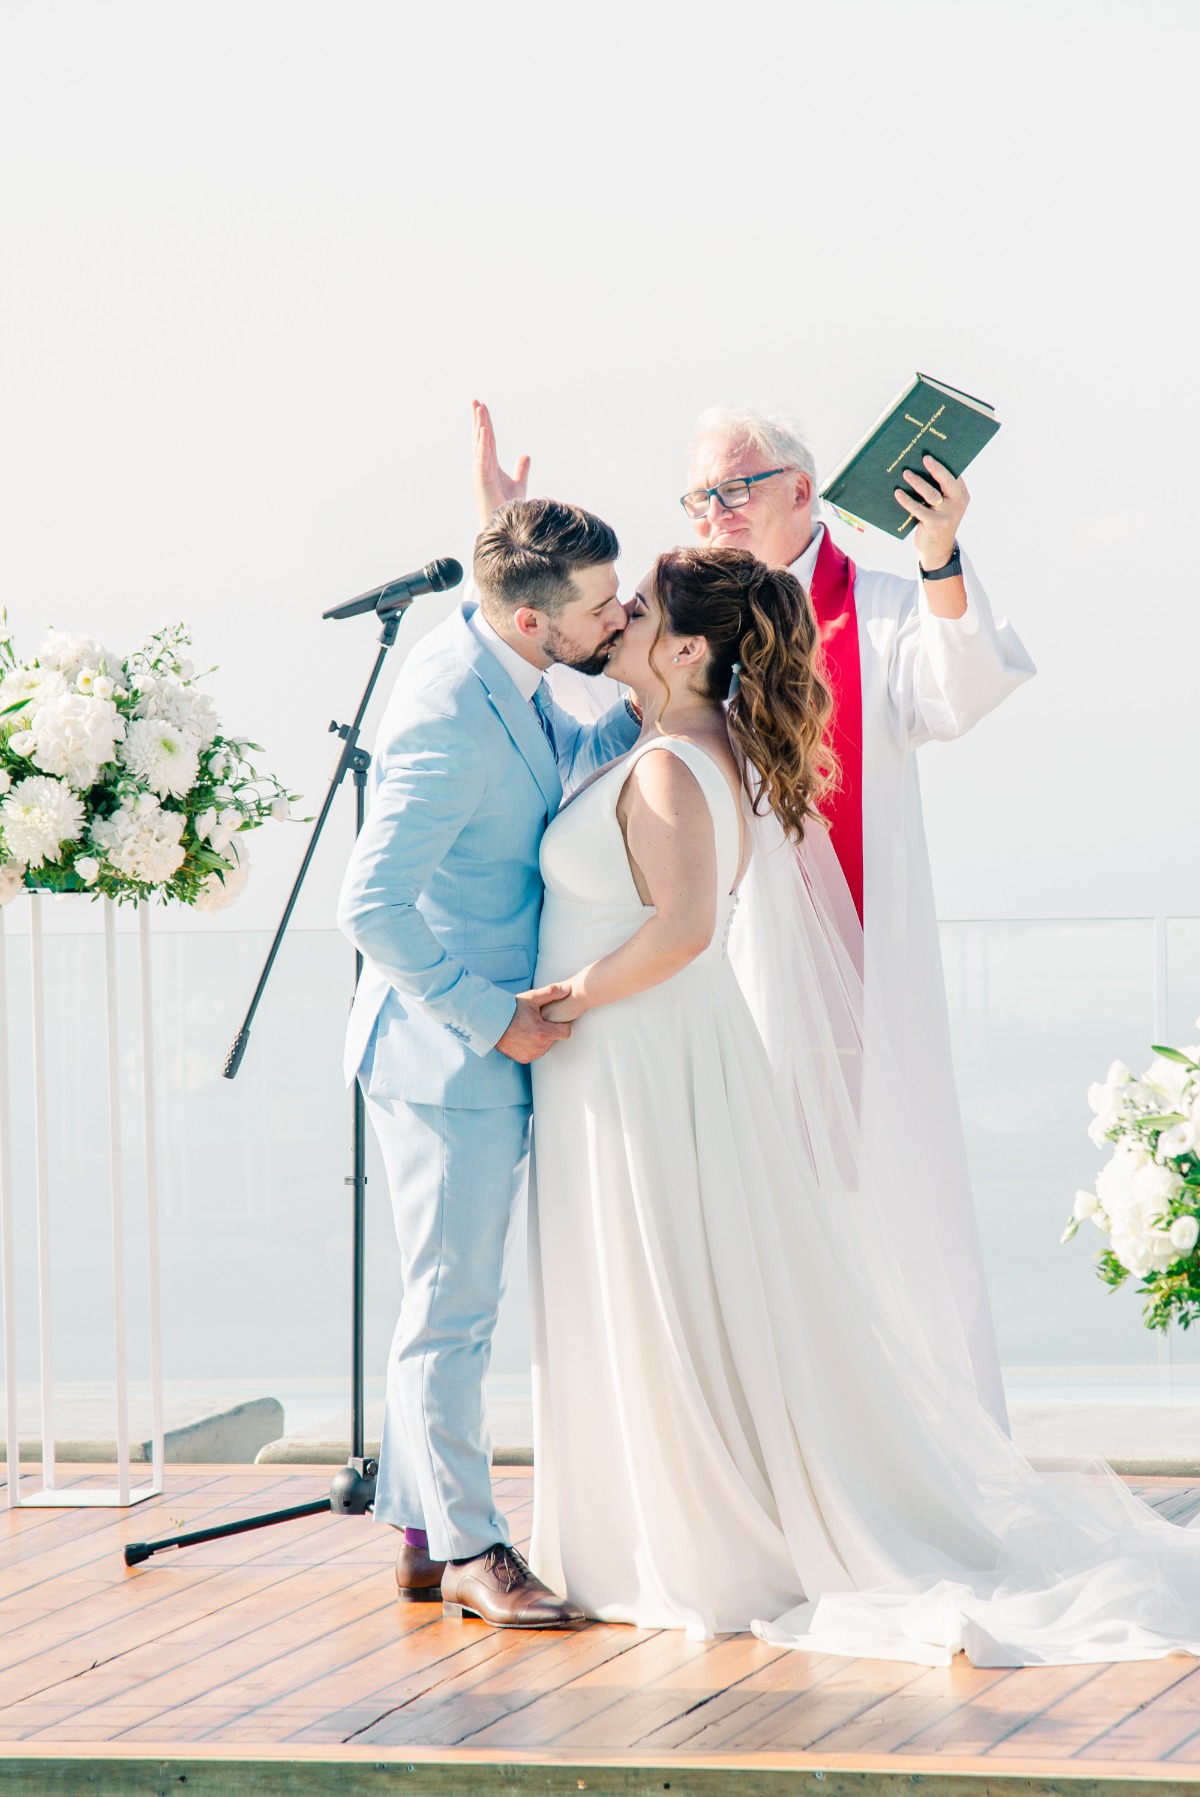 First kiss at modern Greek island wedding ceremony 